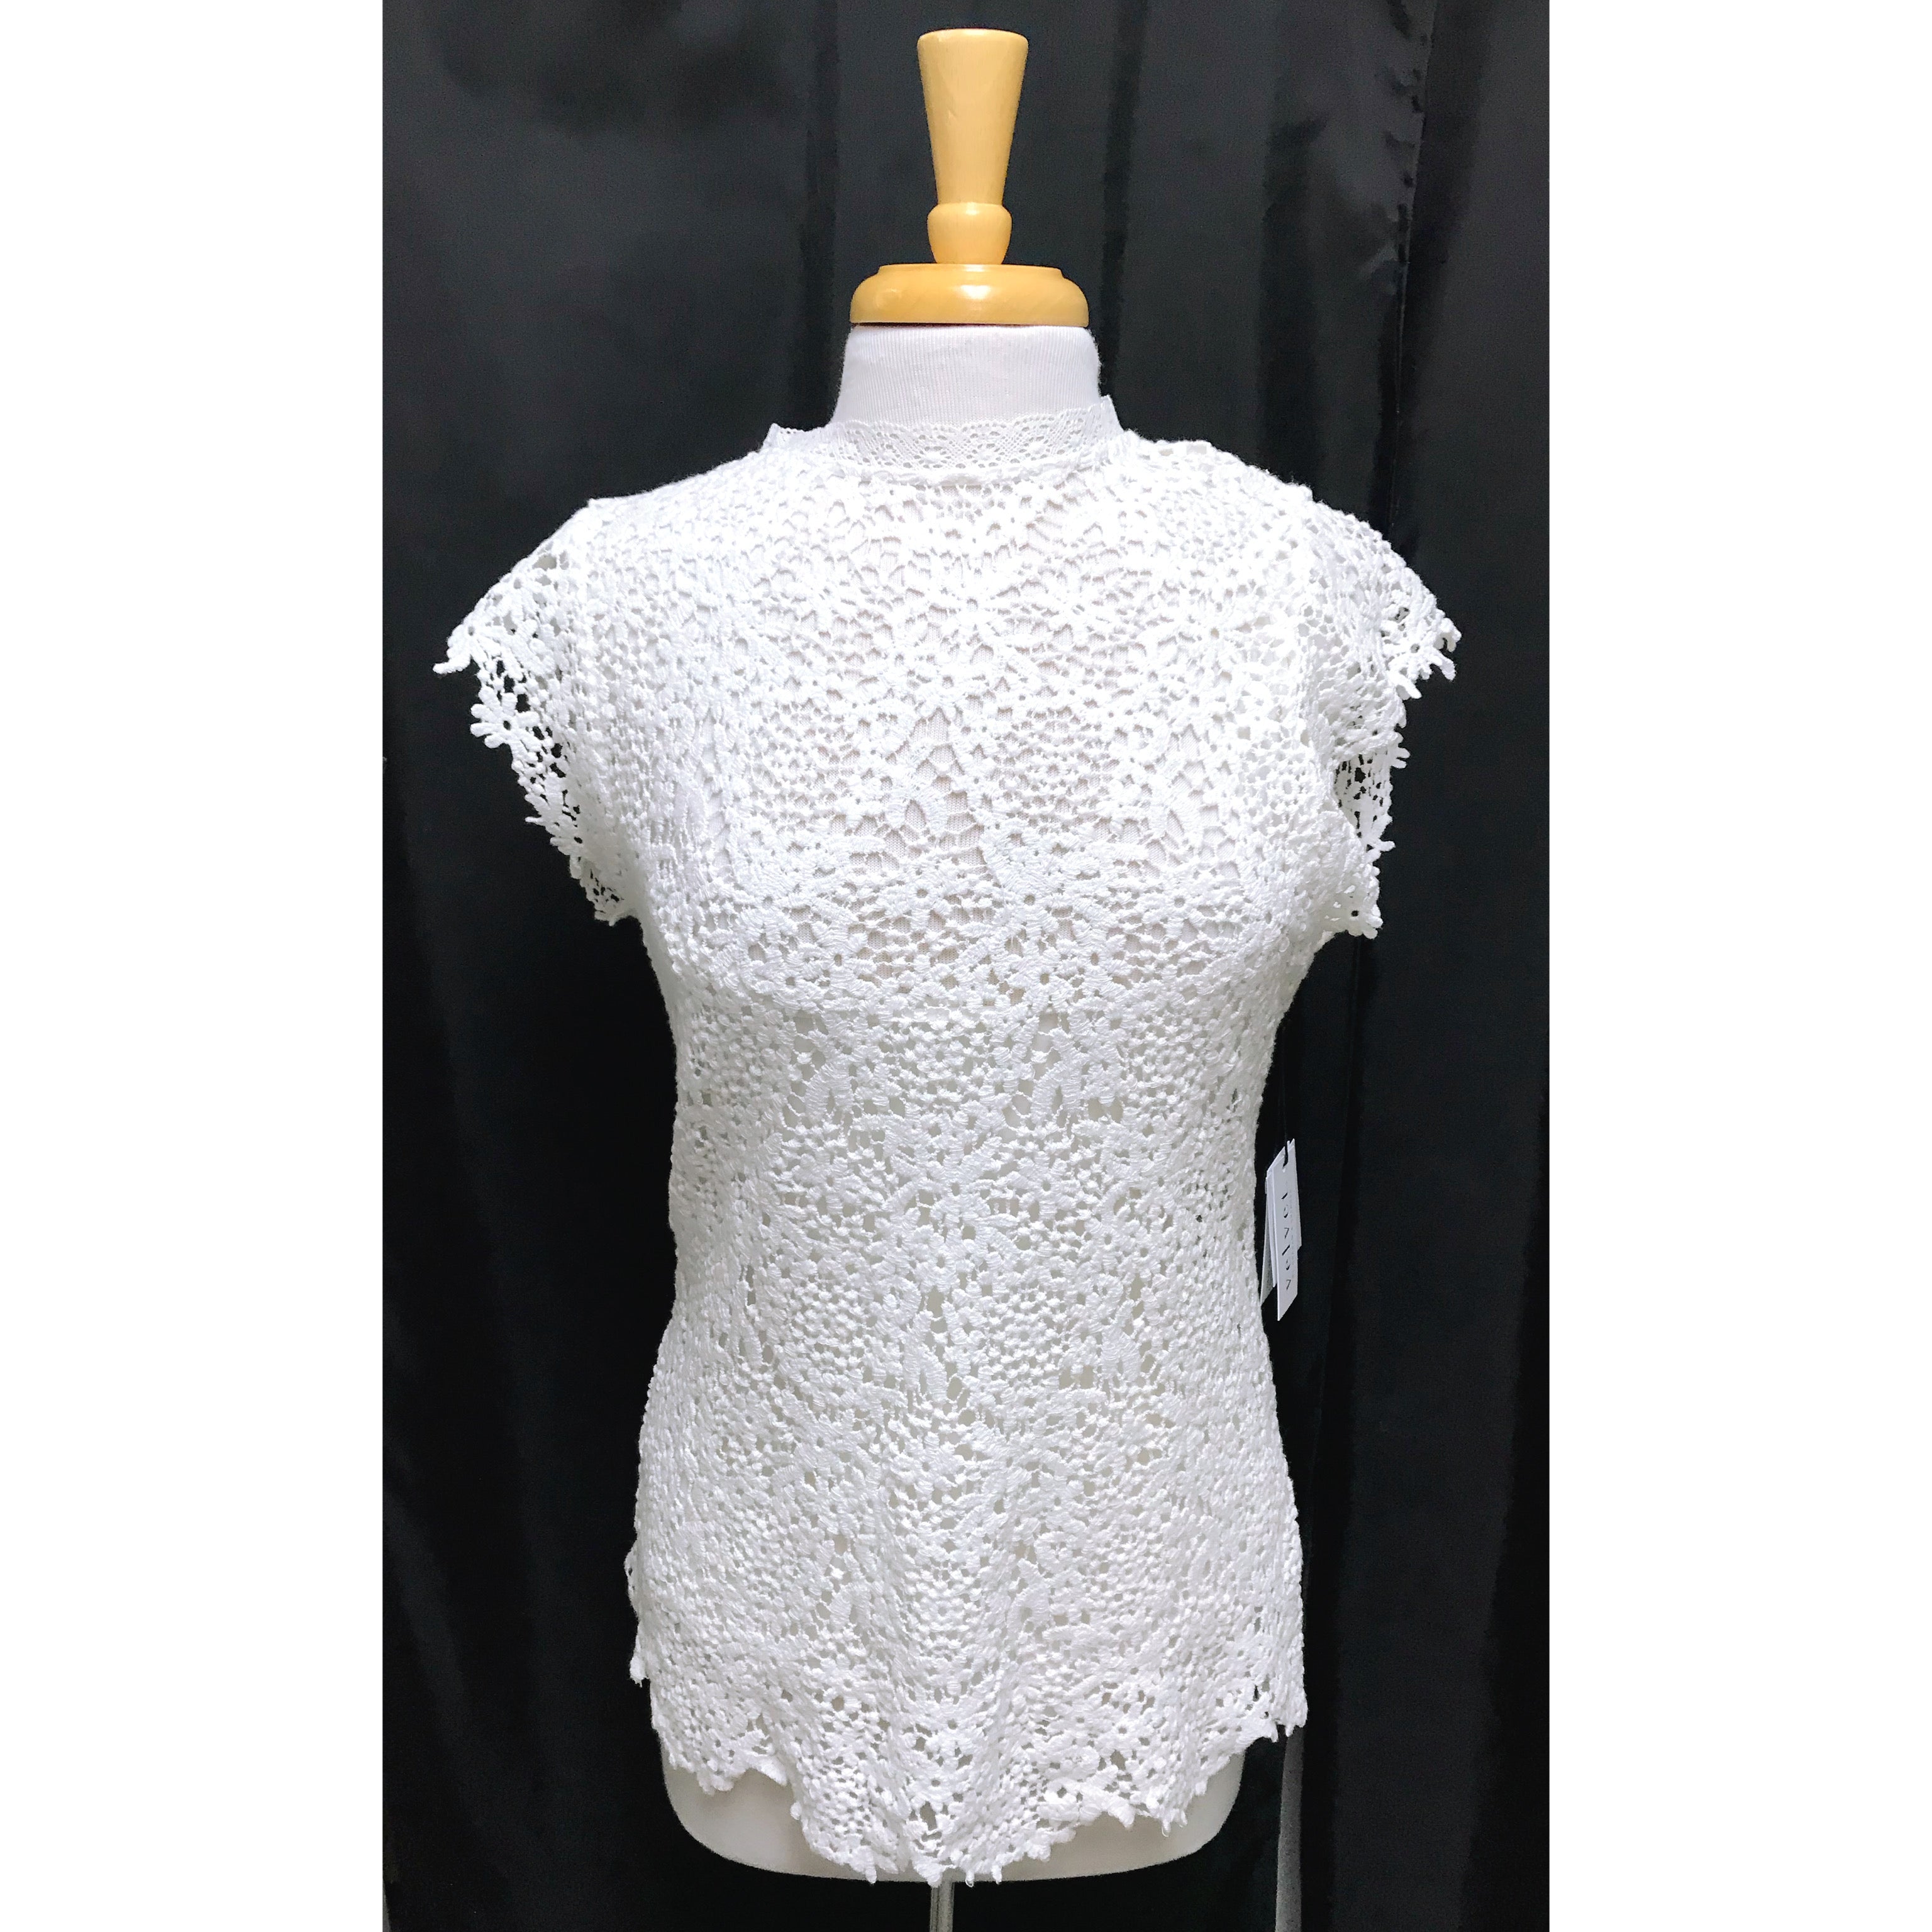 Velvet cream crochet blouse, size M, NEW WITH TAGS!